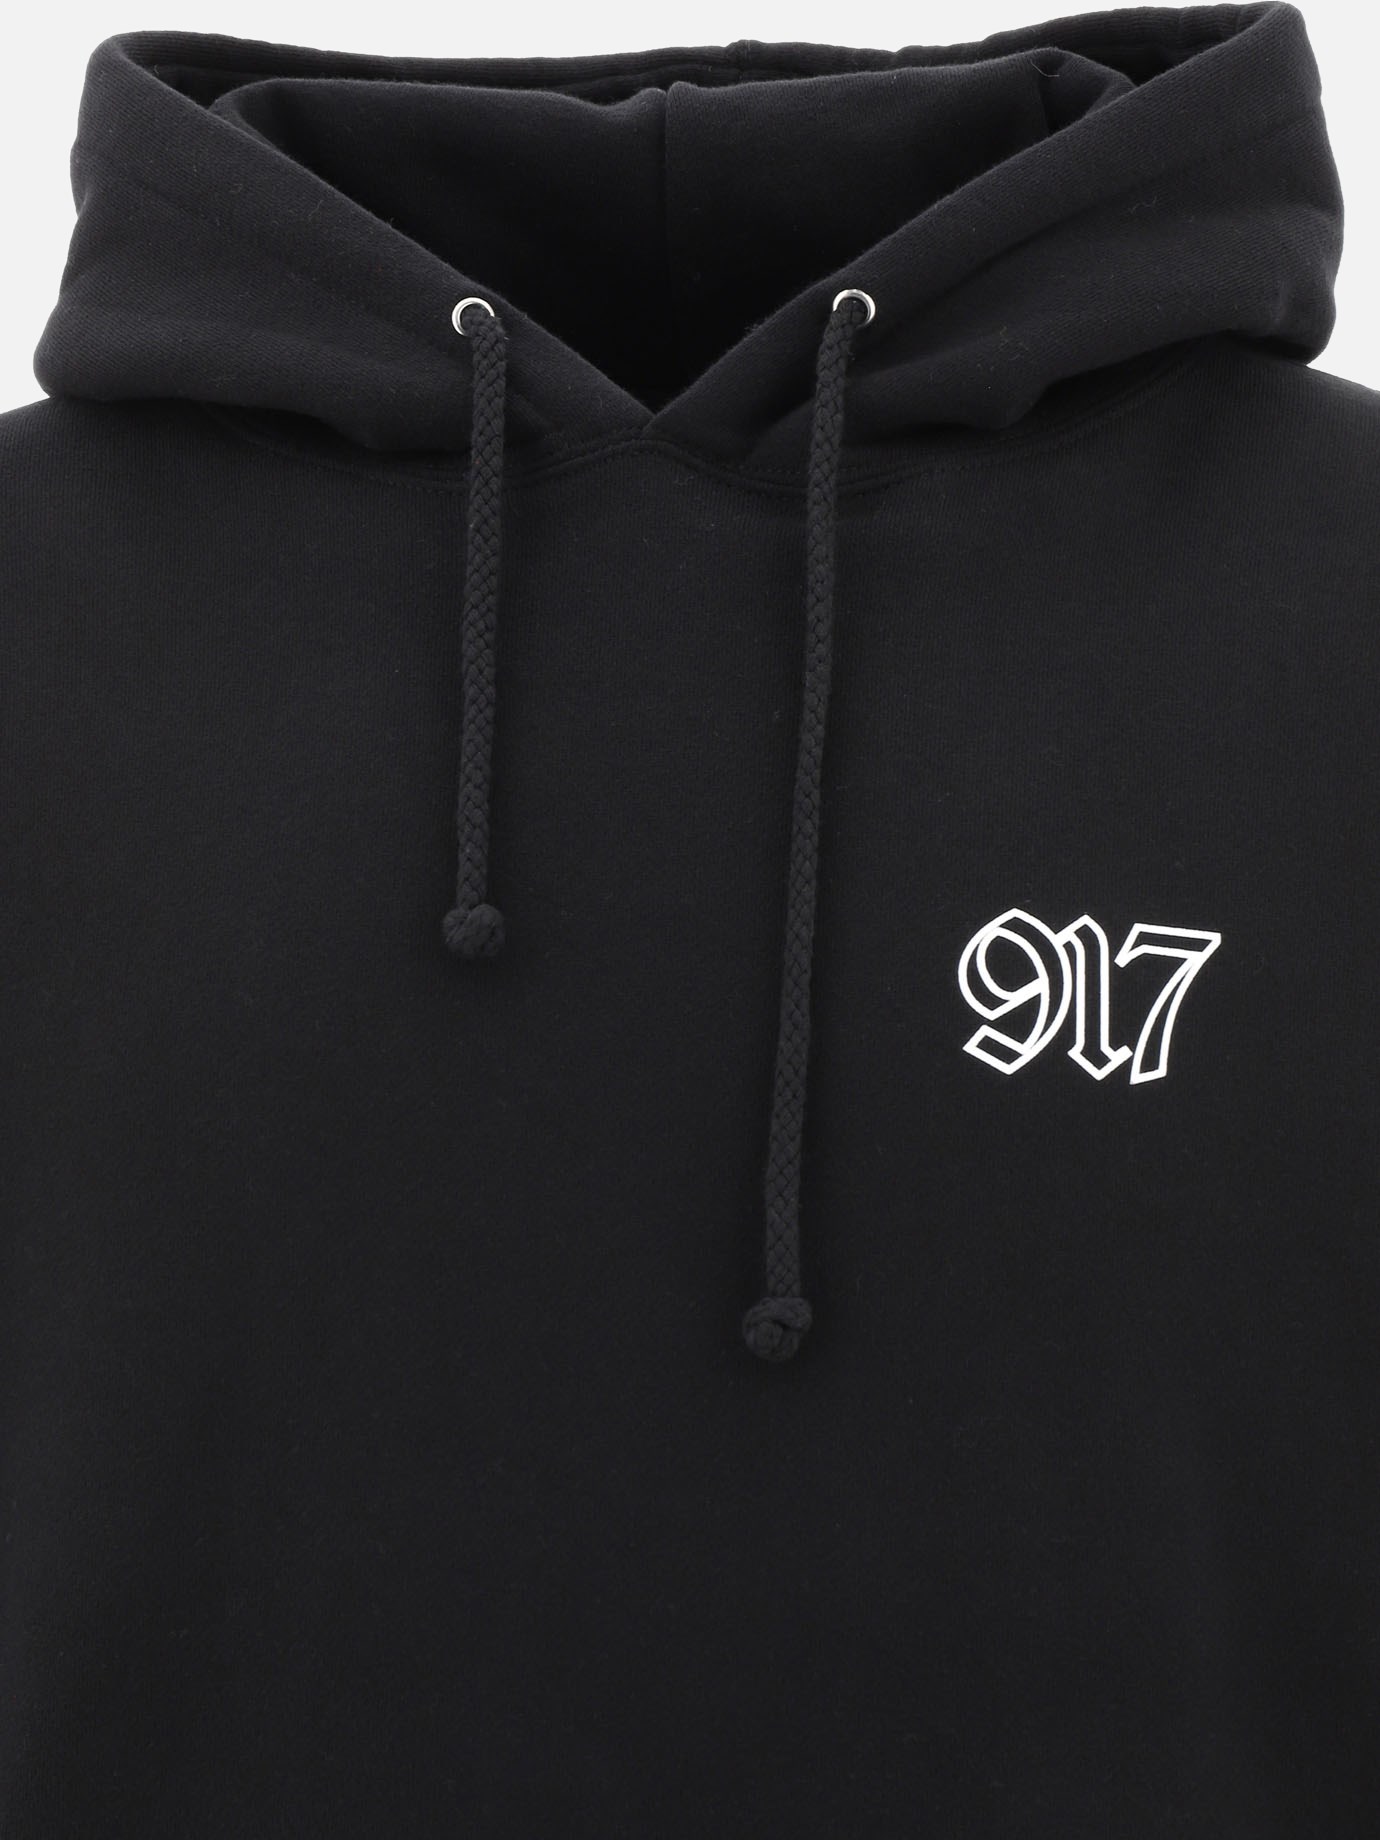  917 Web  hoodie by Call Me 917